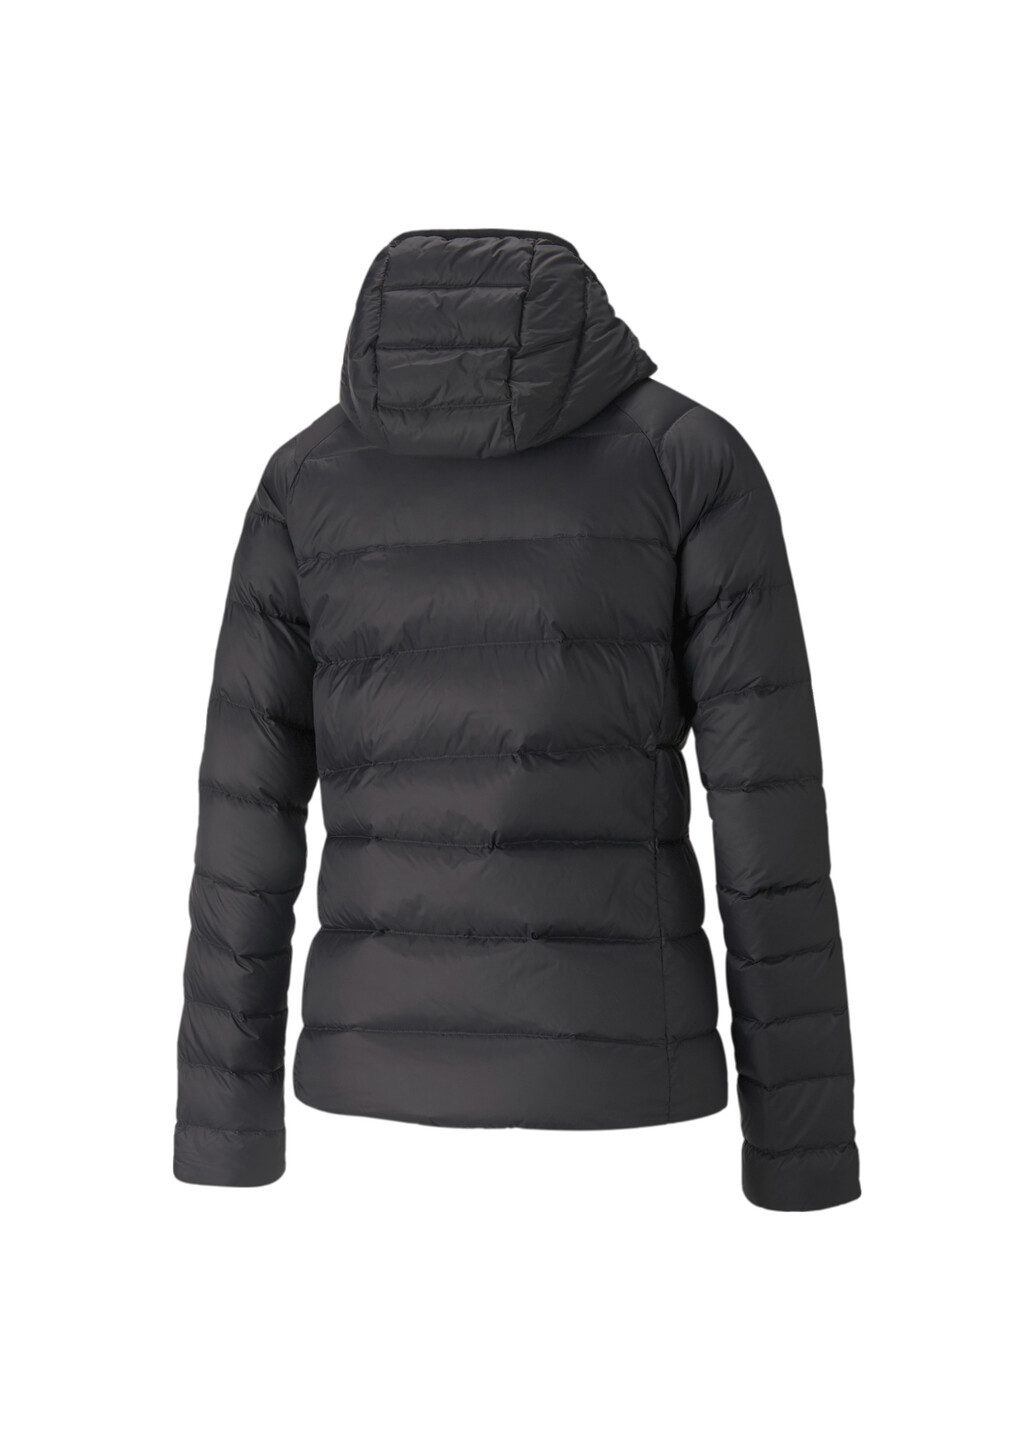 Чорна демісезонна куртка pwrwarm packlite women’s down jacket Puma